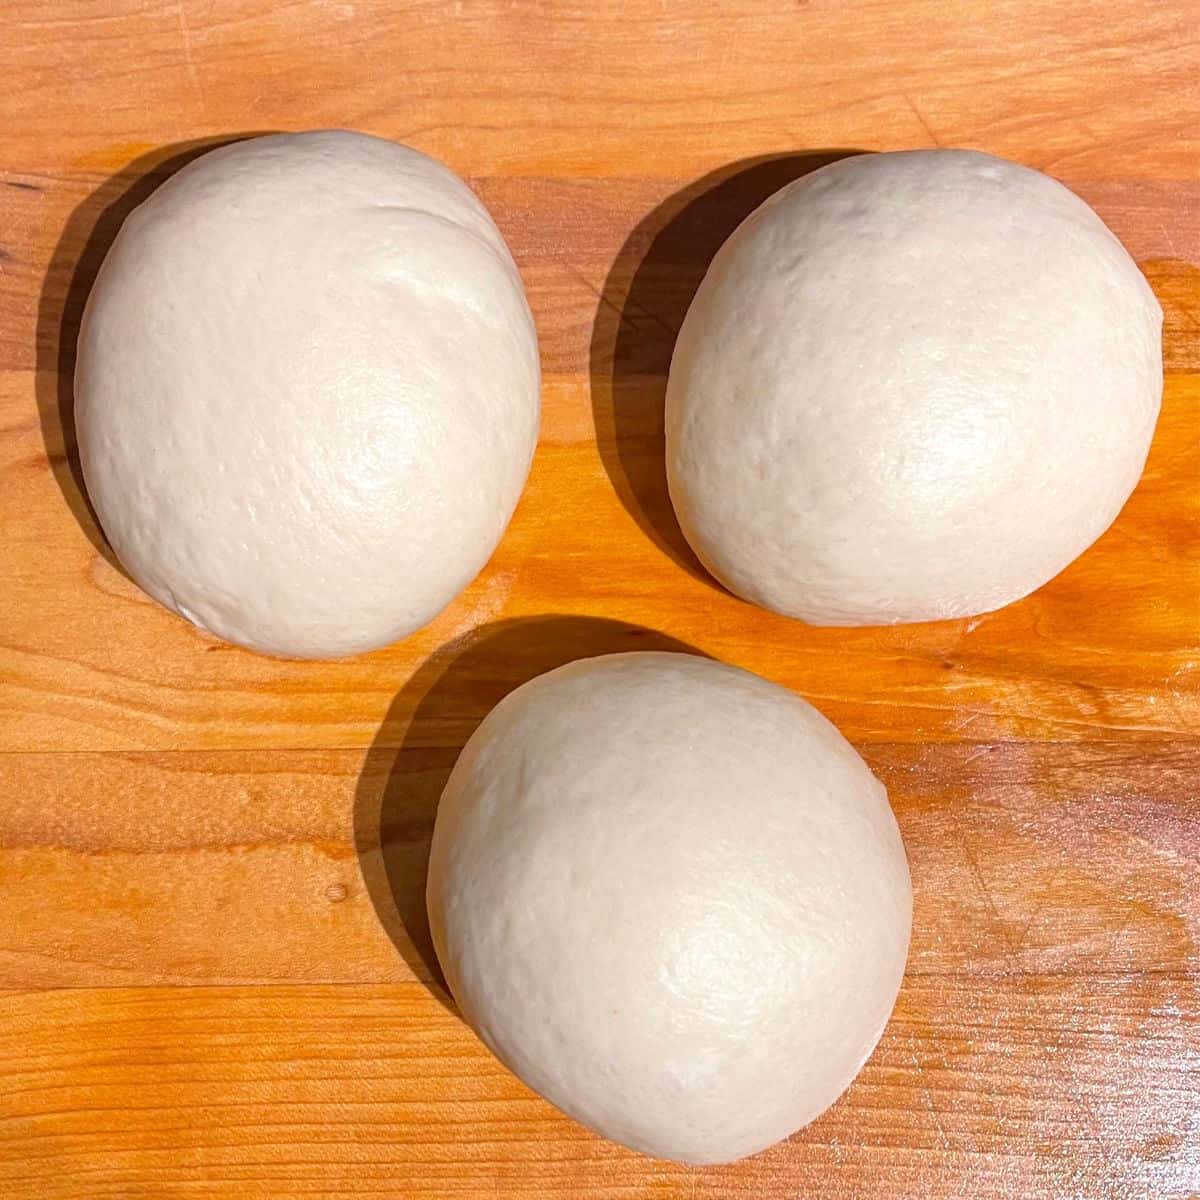 Three balls of vegan challah dough,